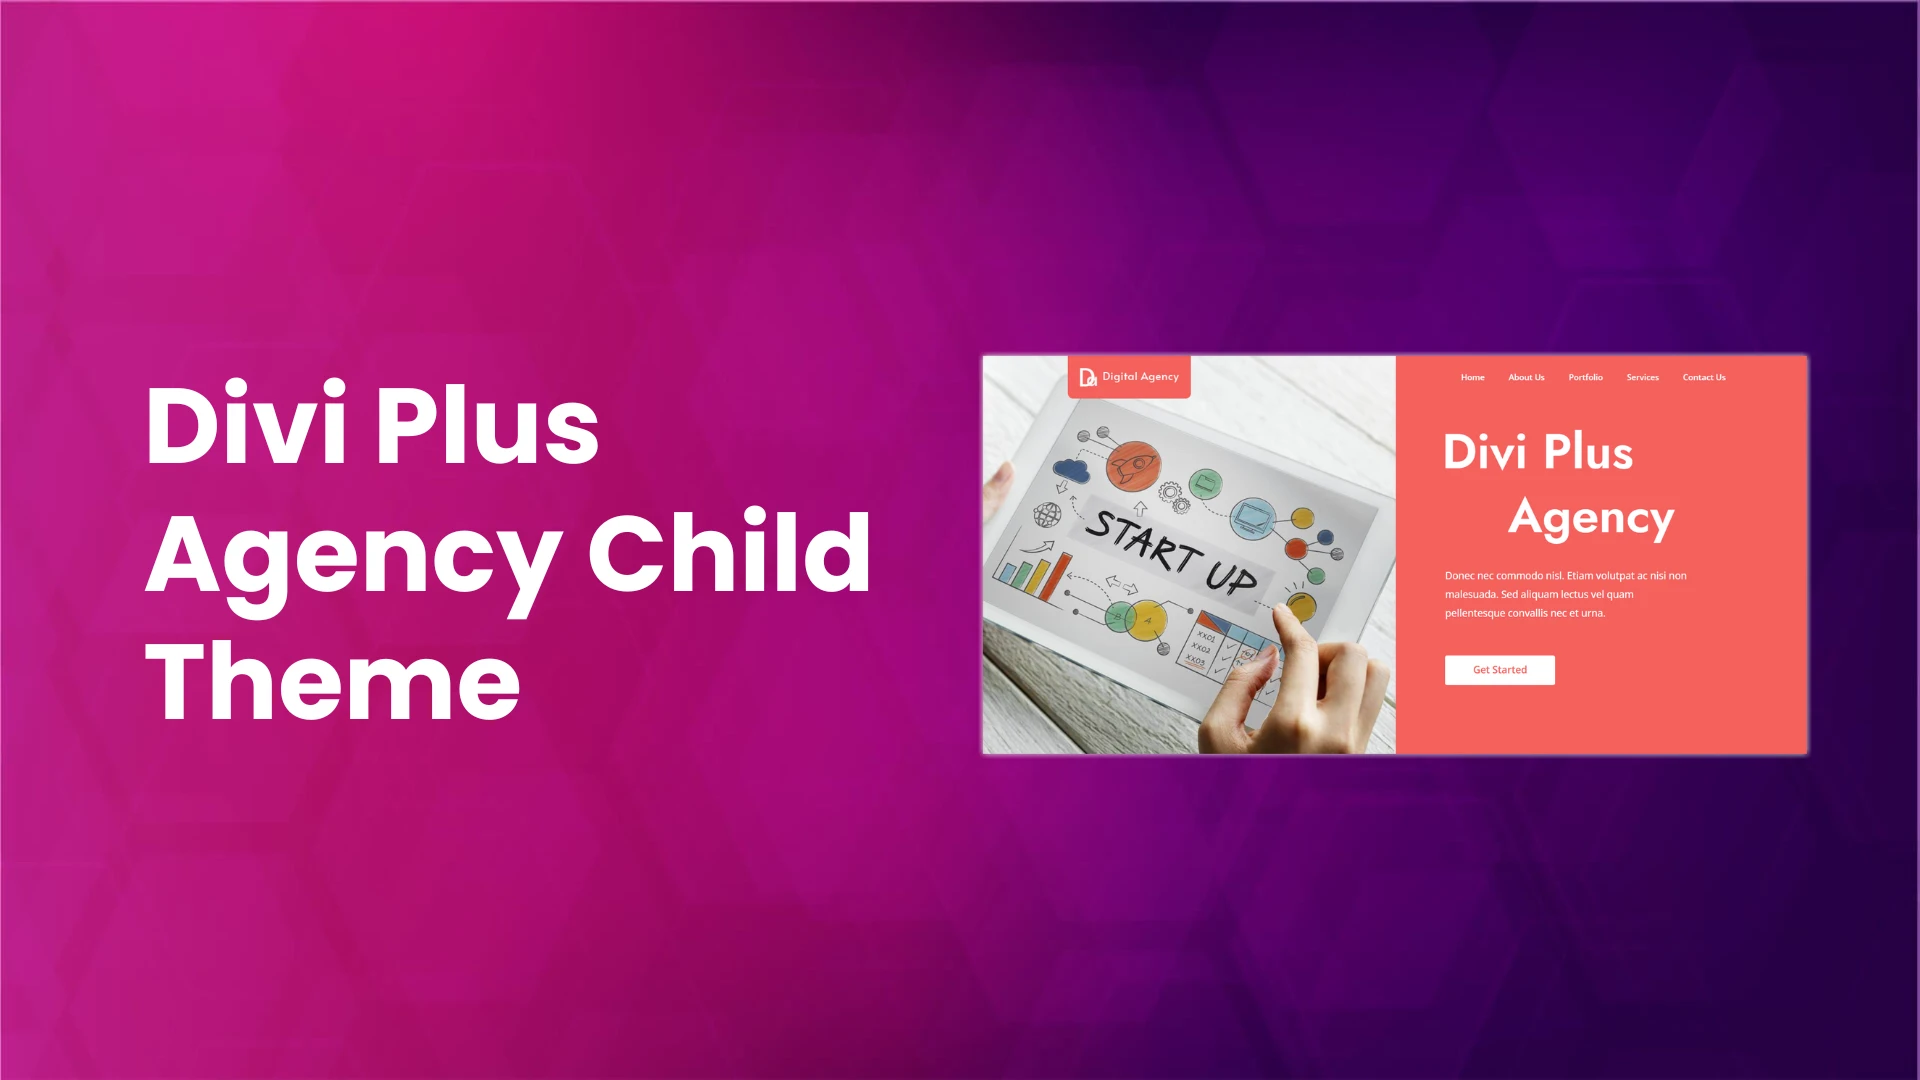 Divi Plus agency child theme for companies